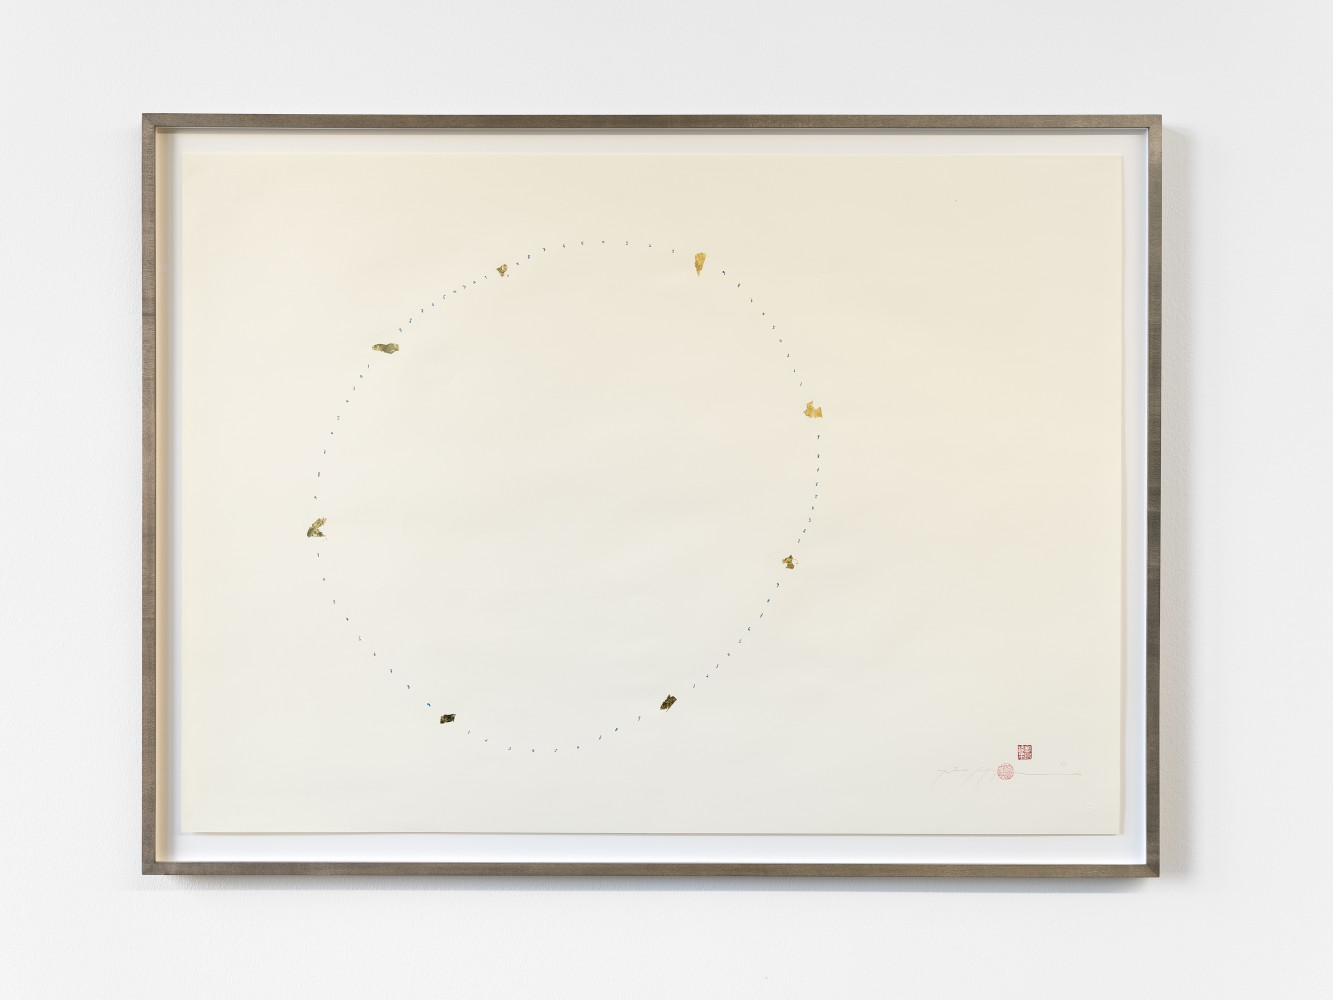 Tatsuo Miyajima, ‘Counting Gold’, 1995, Ink and gold on paper 